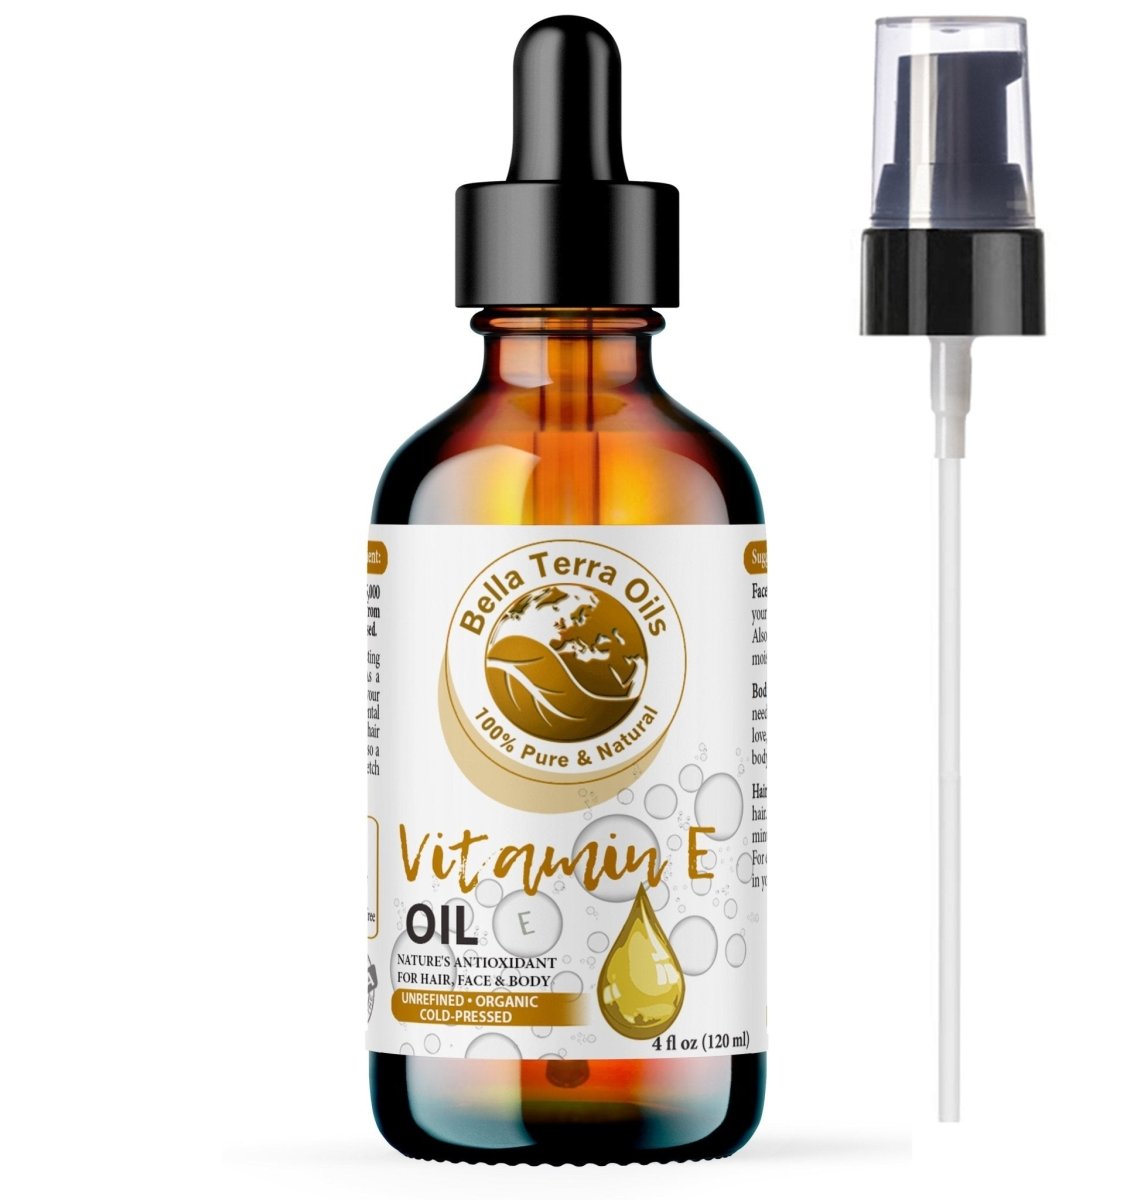 Body Wonders 100% Pure Rosemary Essential Oil 4 Fl Oz (118 Ml